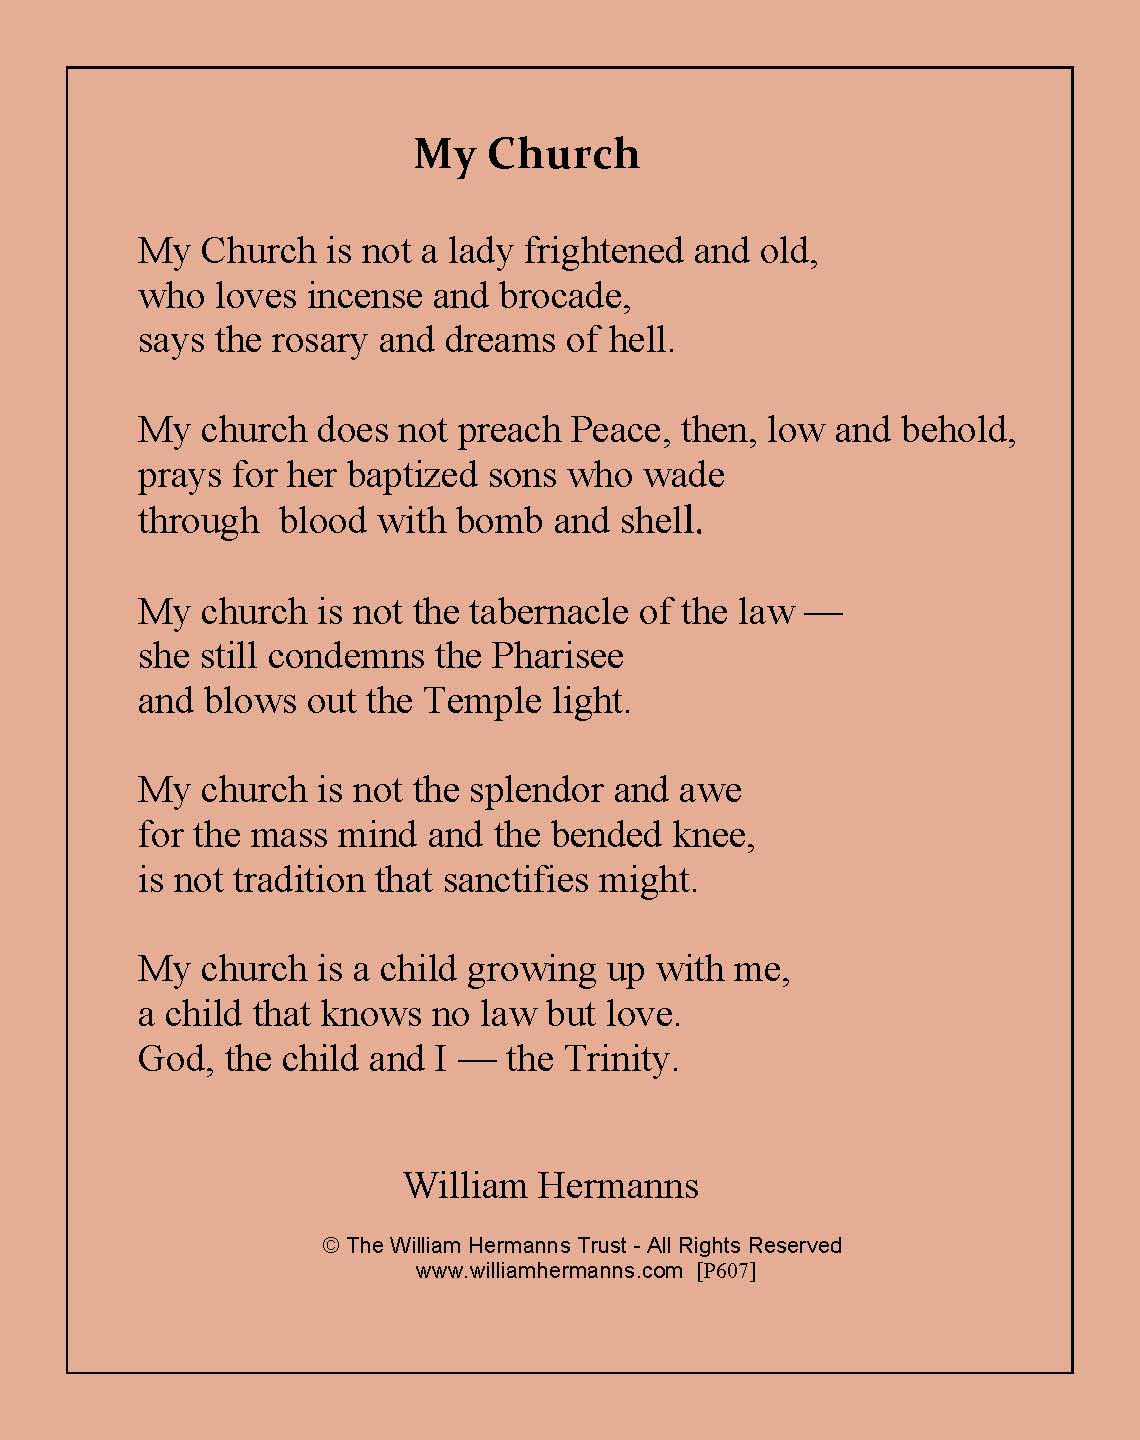 My Church by William Hermanns